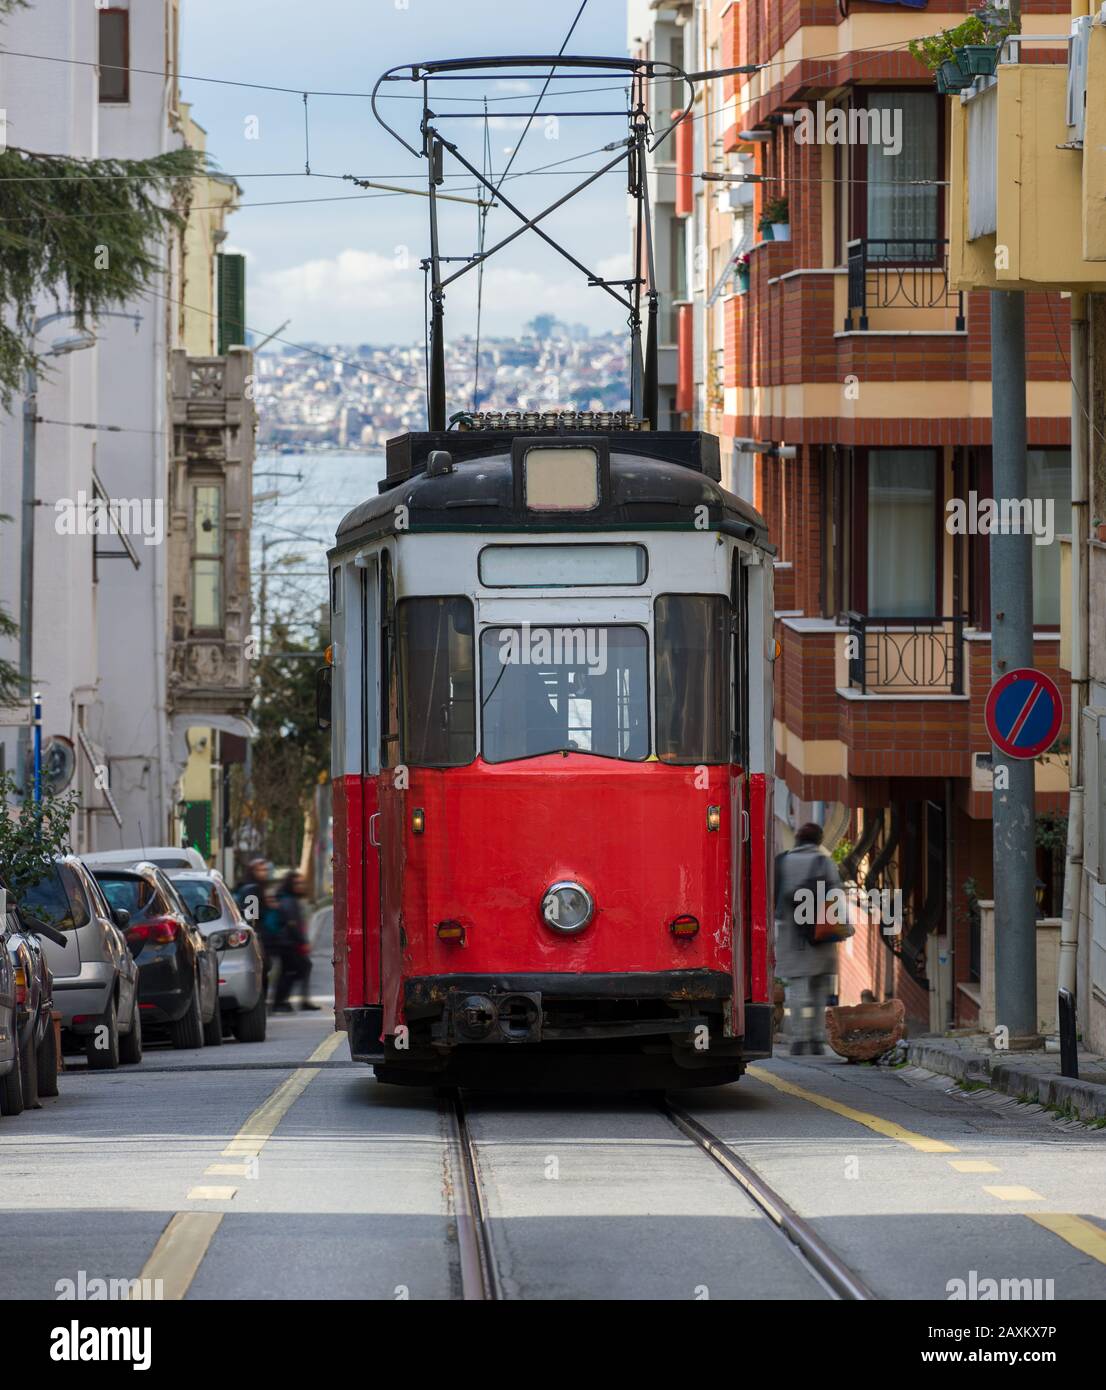 Tram nostalgico nel quartiere di Kadikoy. Kadıköy è un quartiere storico di Istanbul. Foto Stock